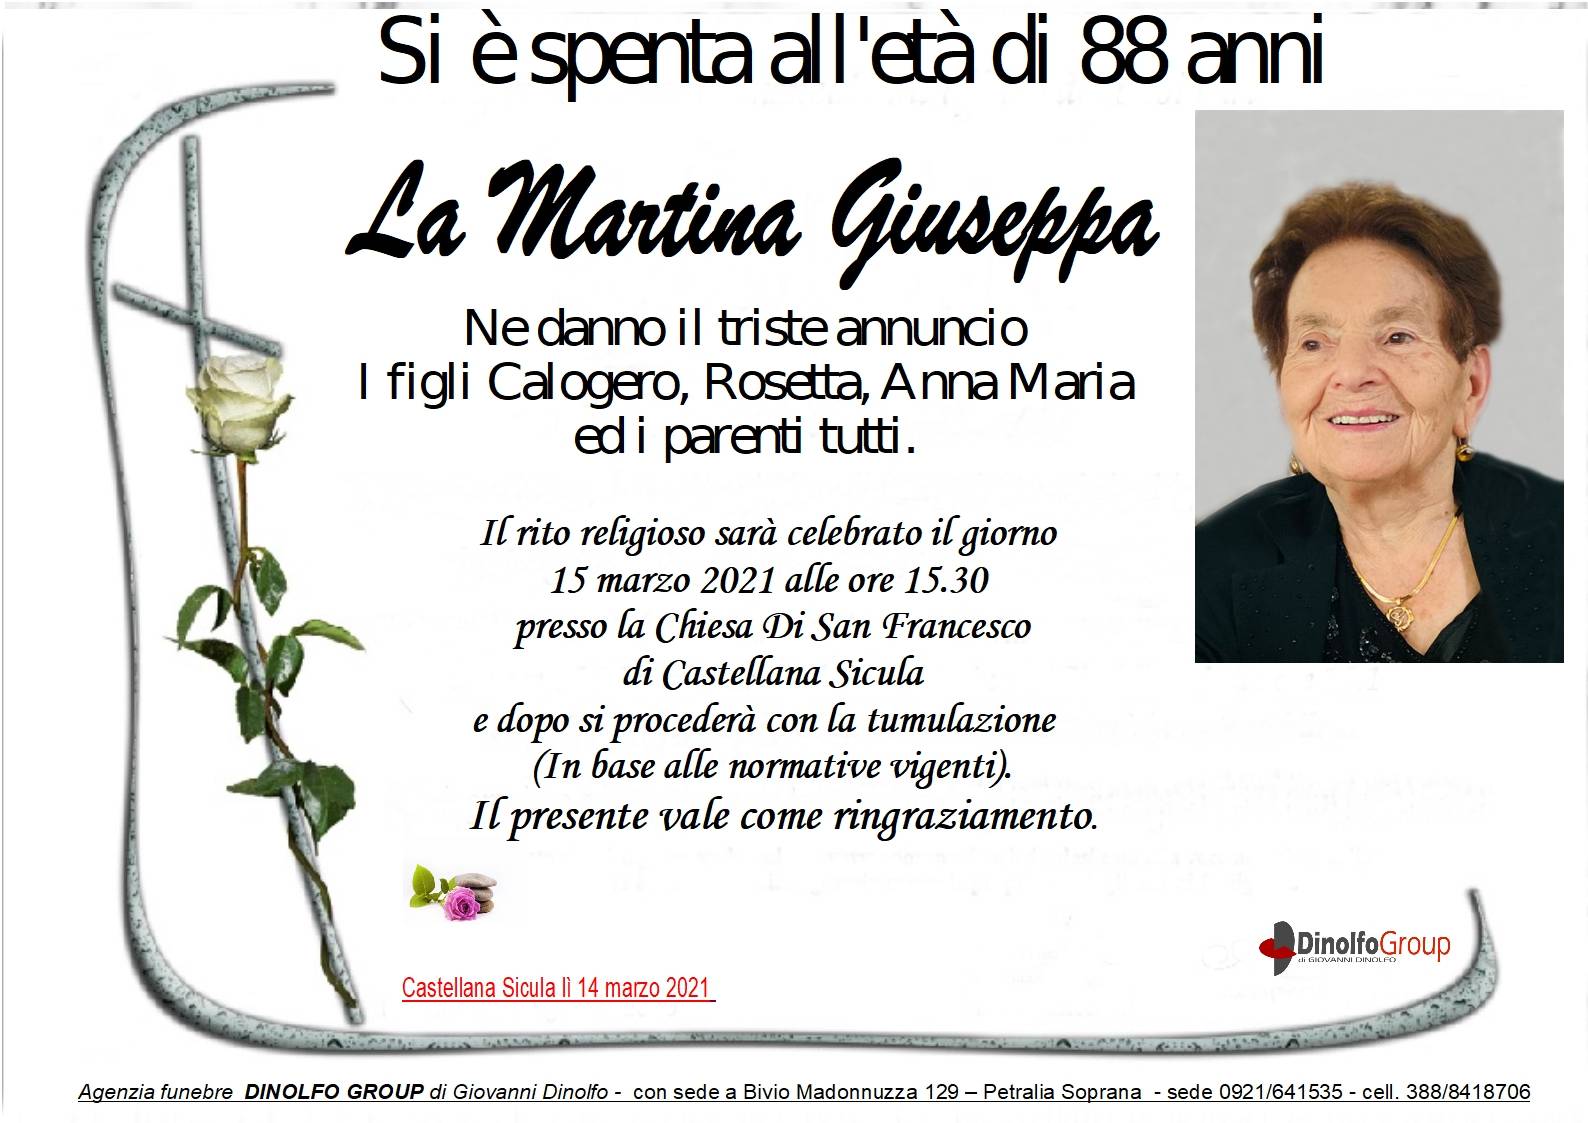 Giuseppa La Martina